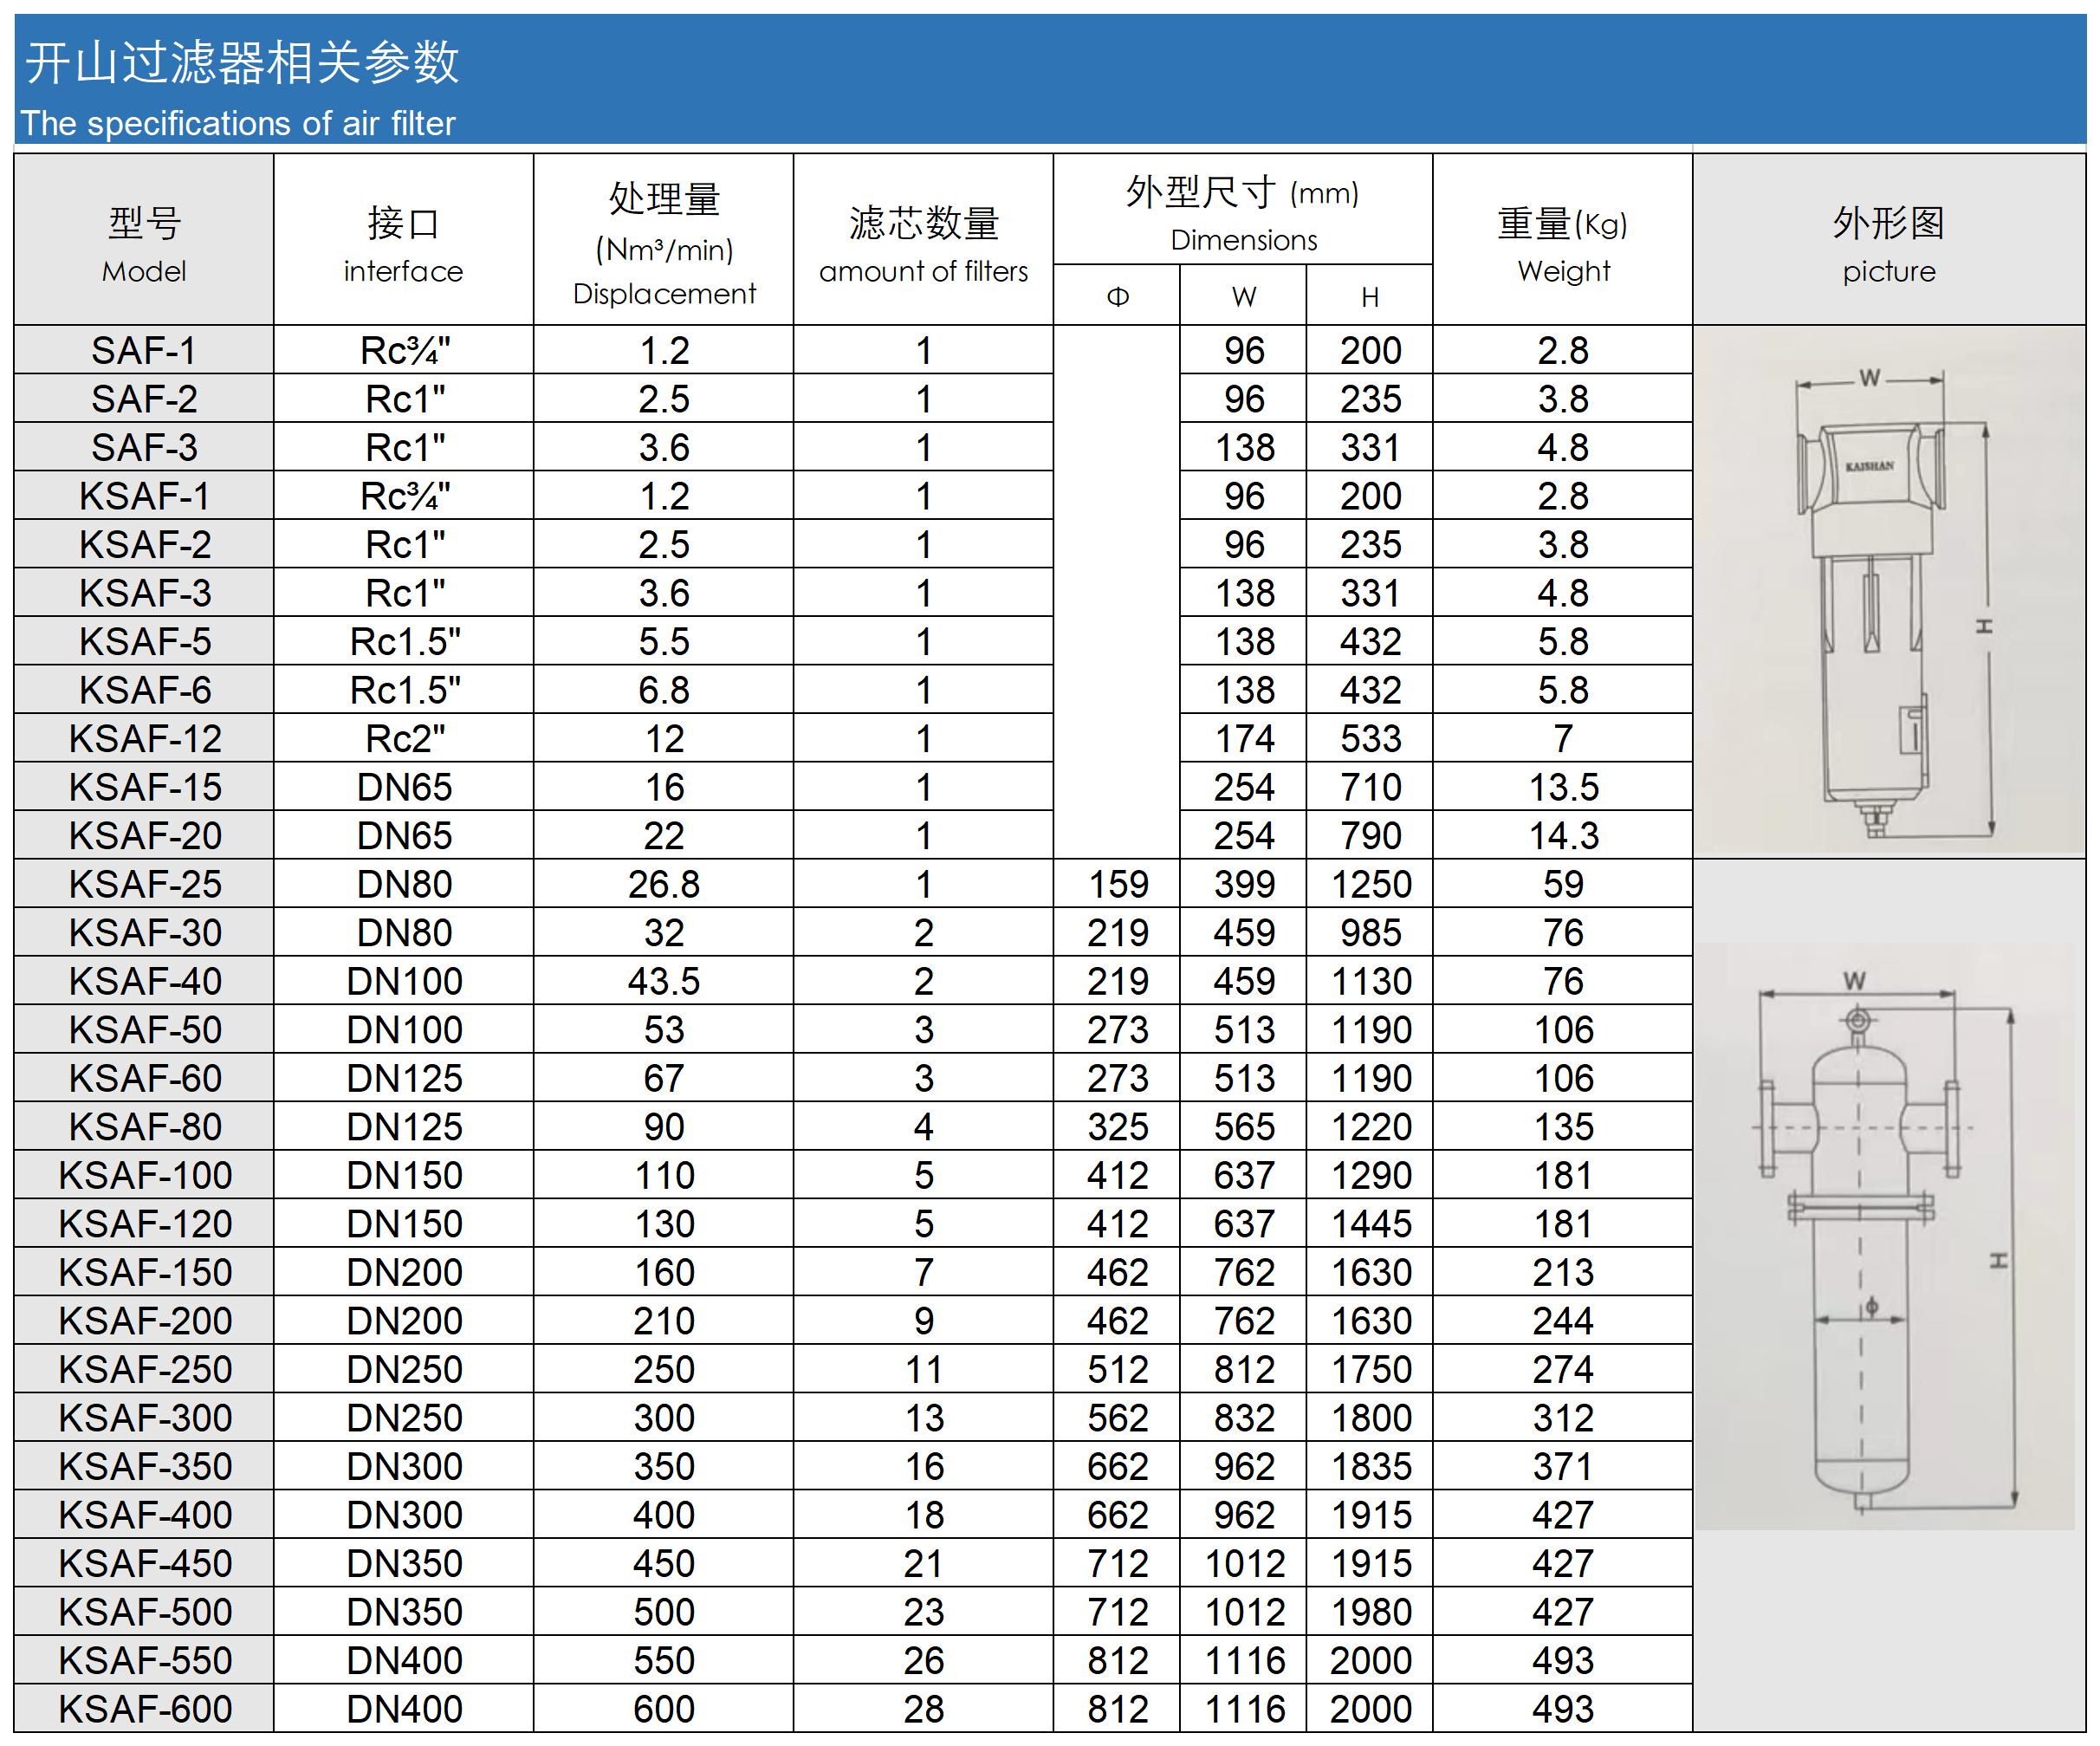 specifications of air filter.jpg